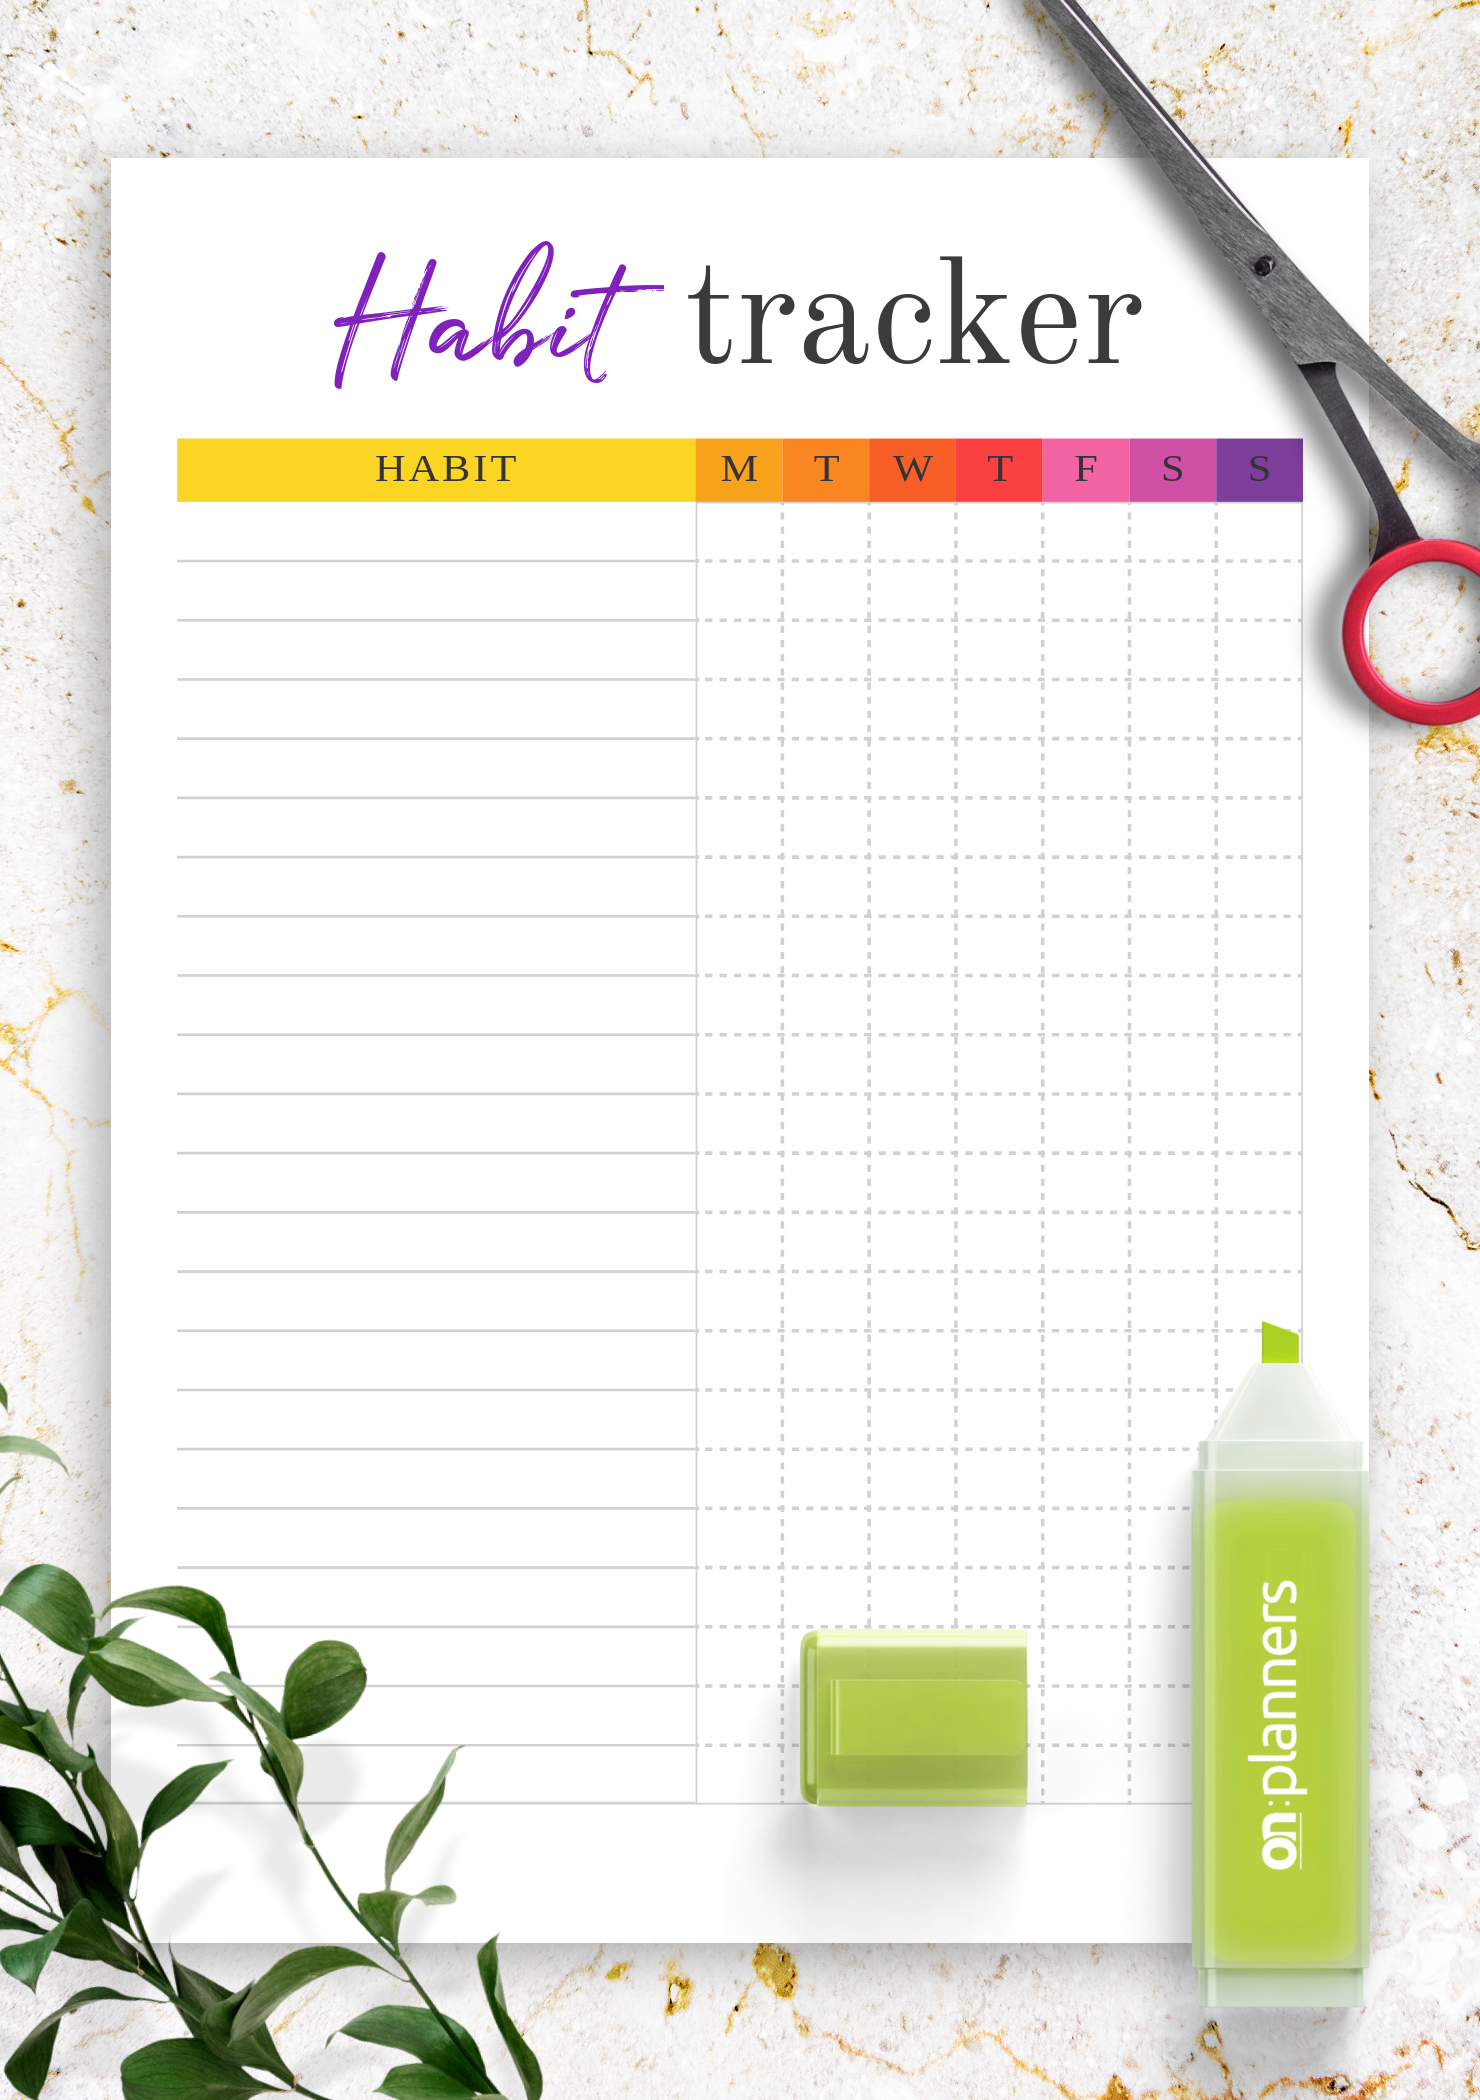 Paper Party Supplies Habit Tracker Template Habits Tracker Habit Log